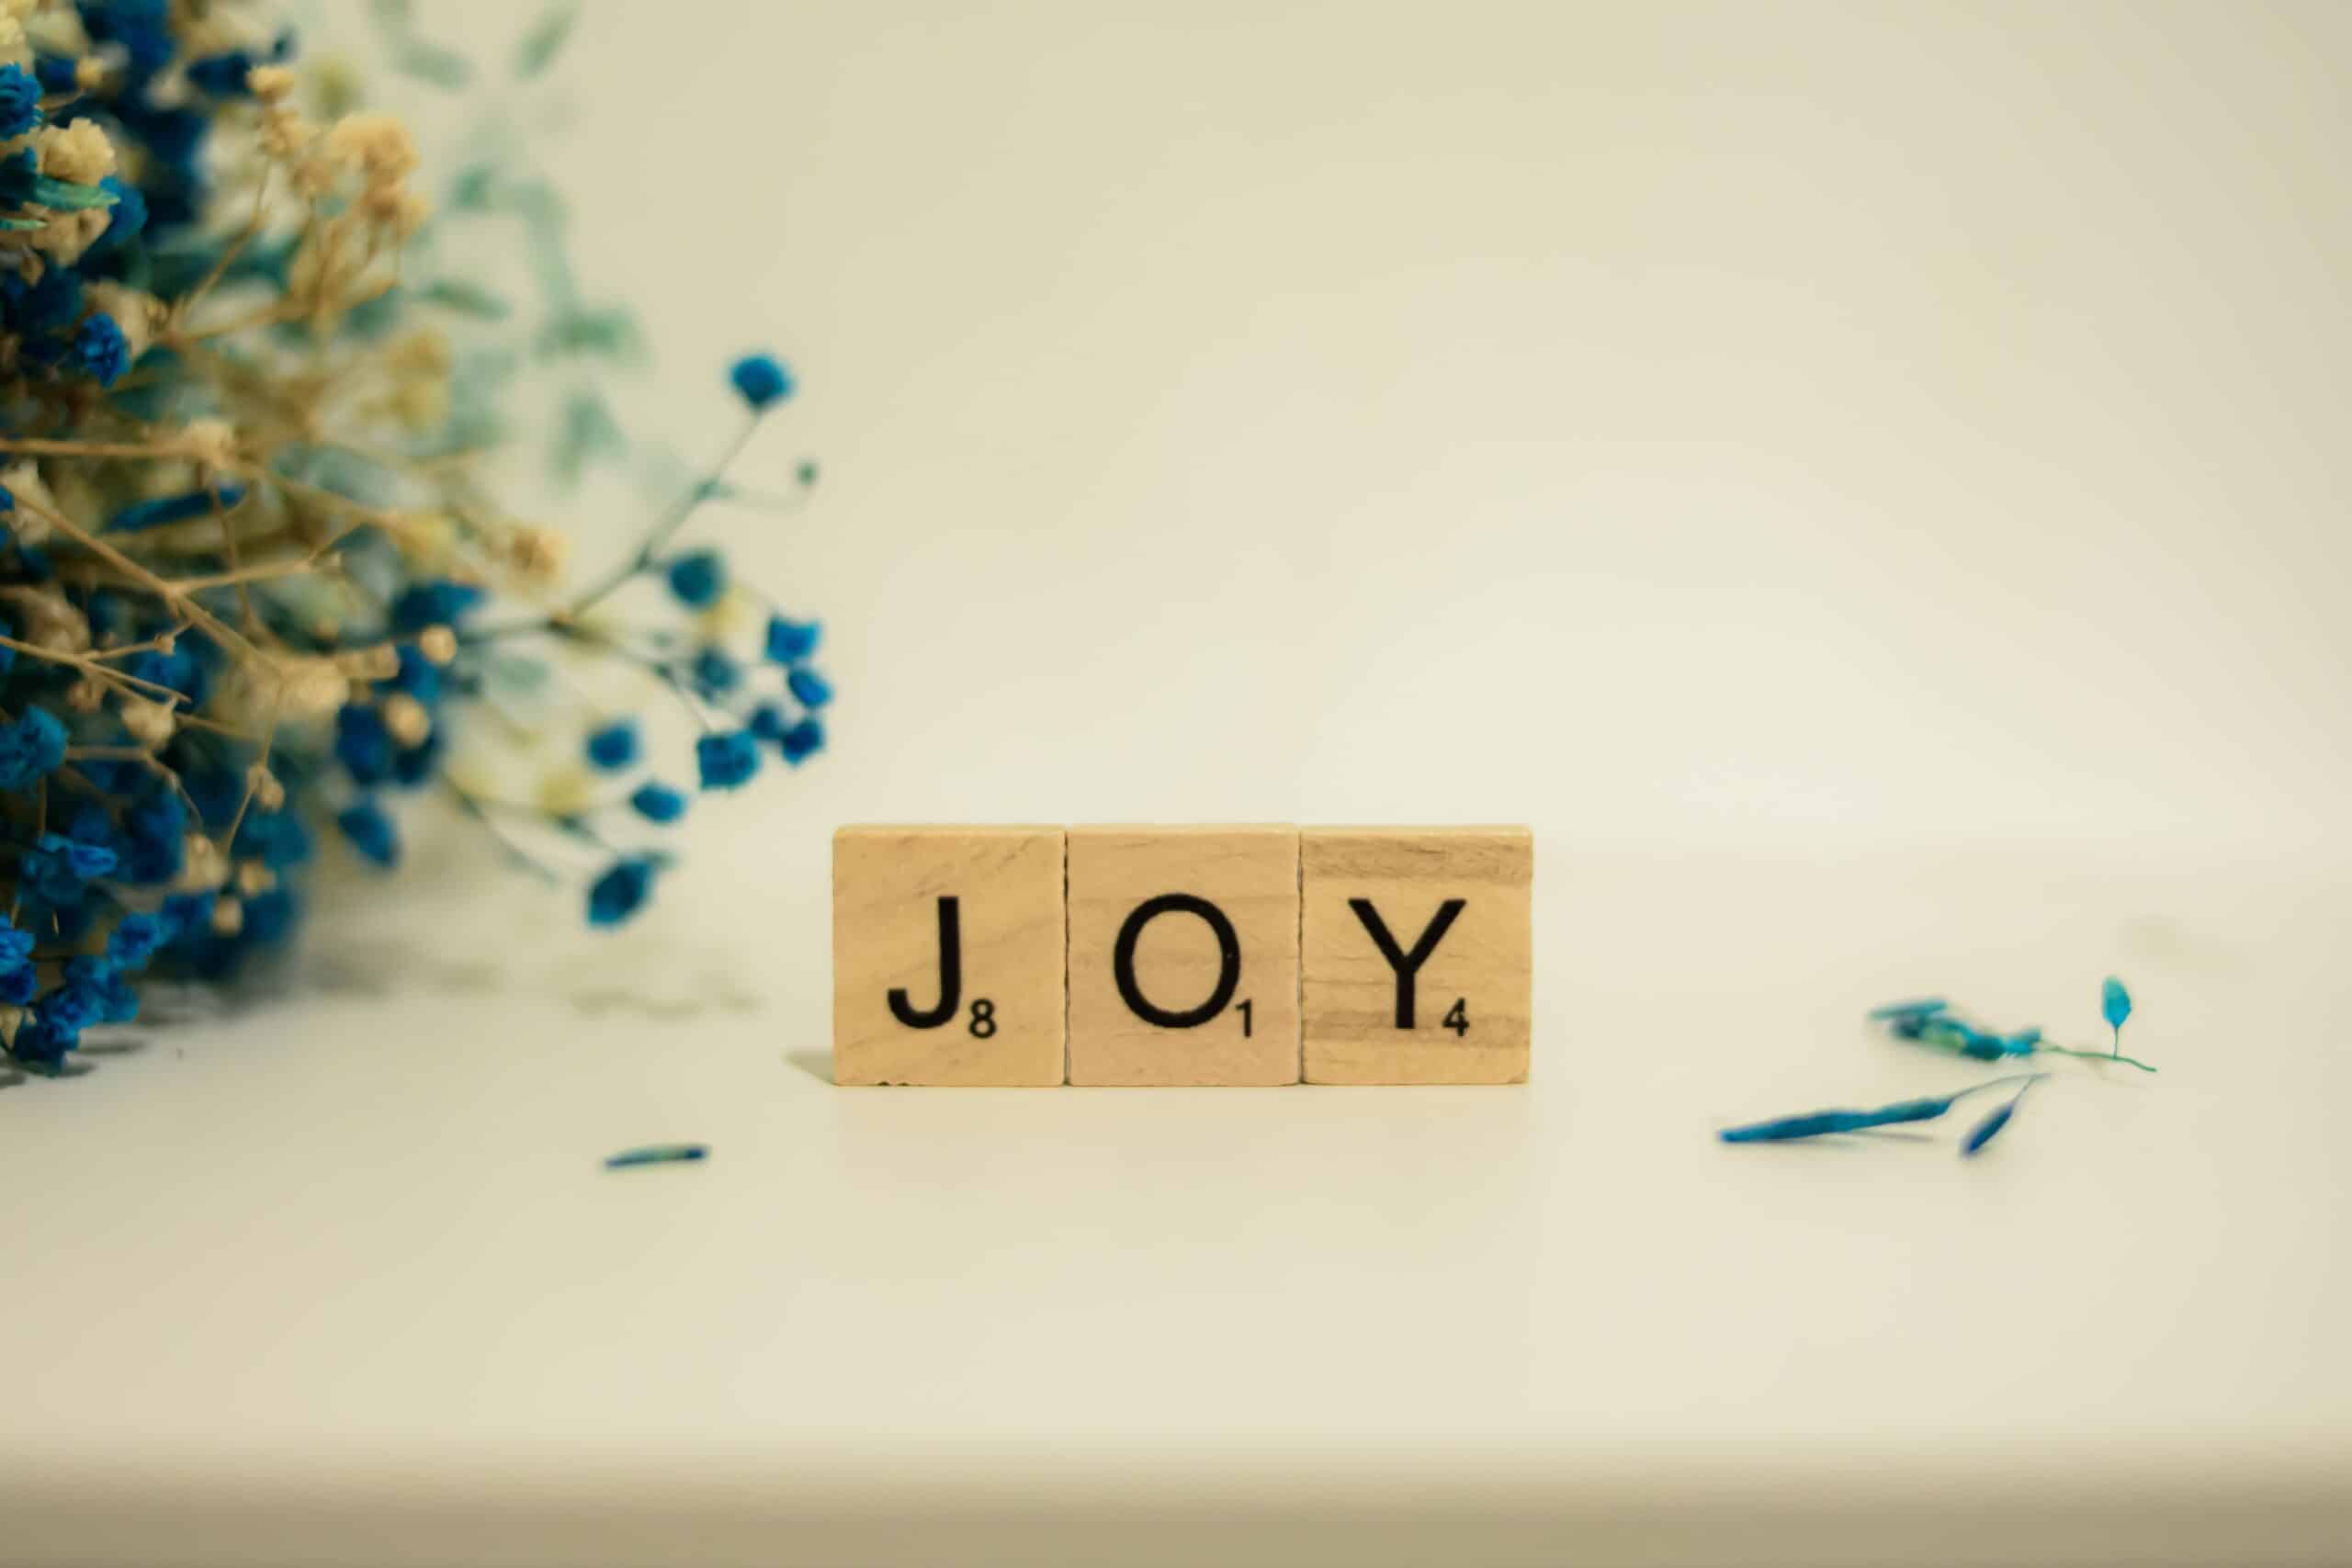 Popular Bible Verses About Joy